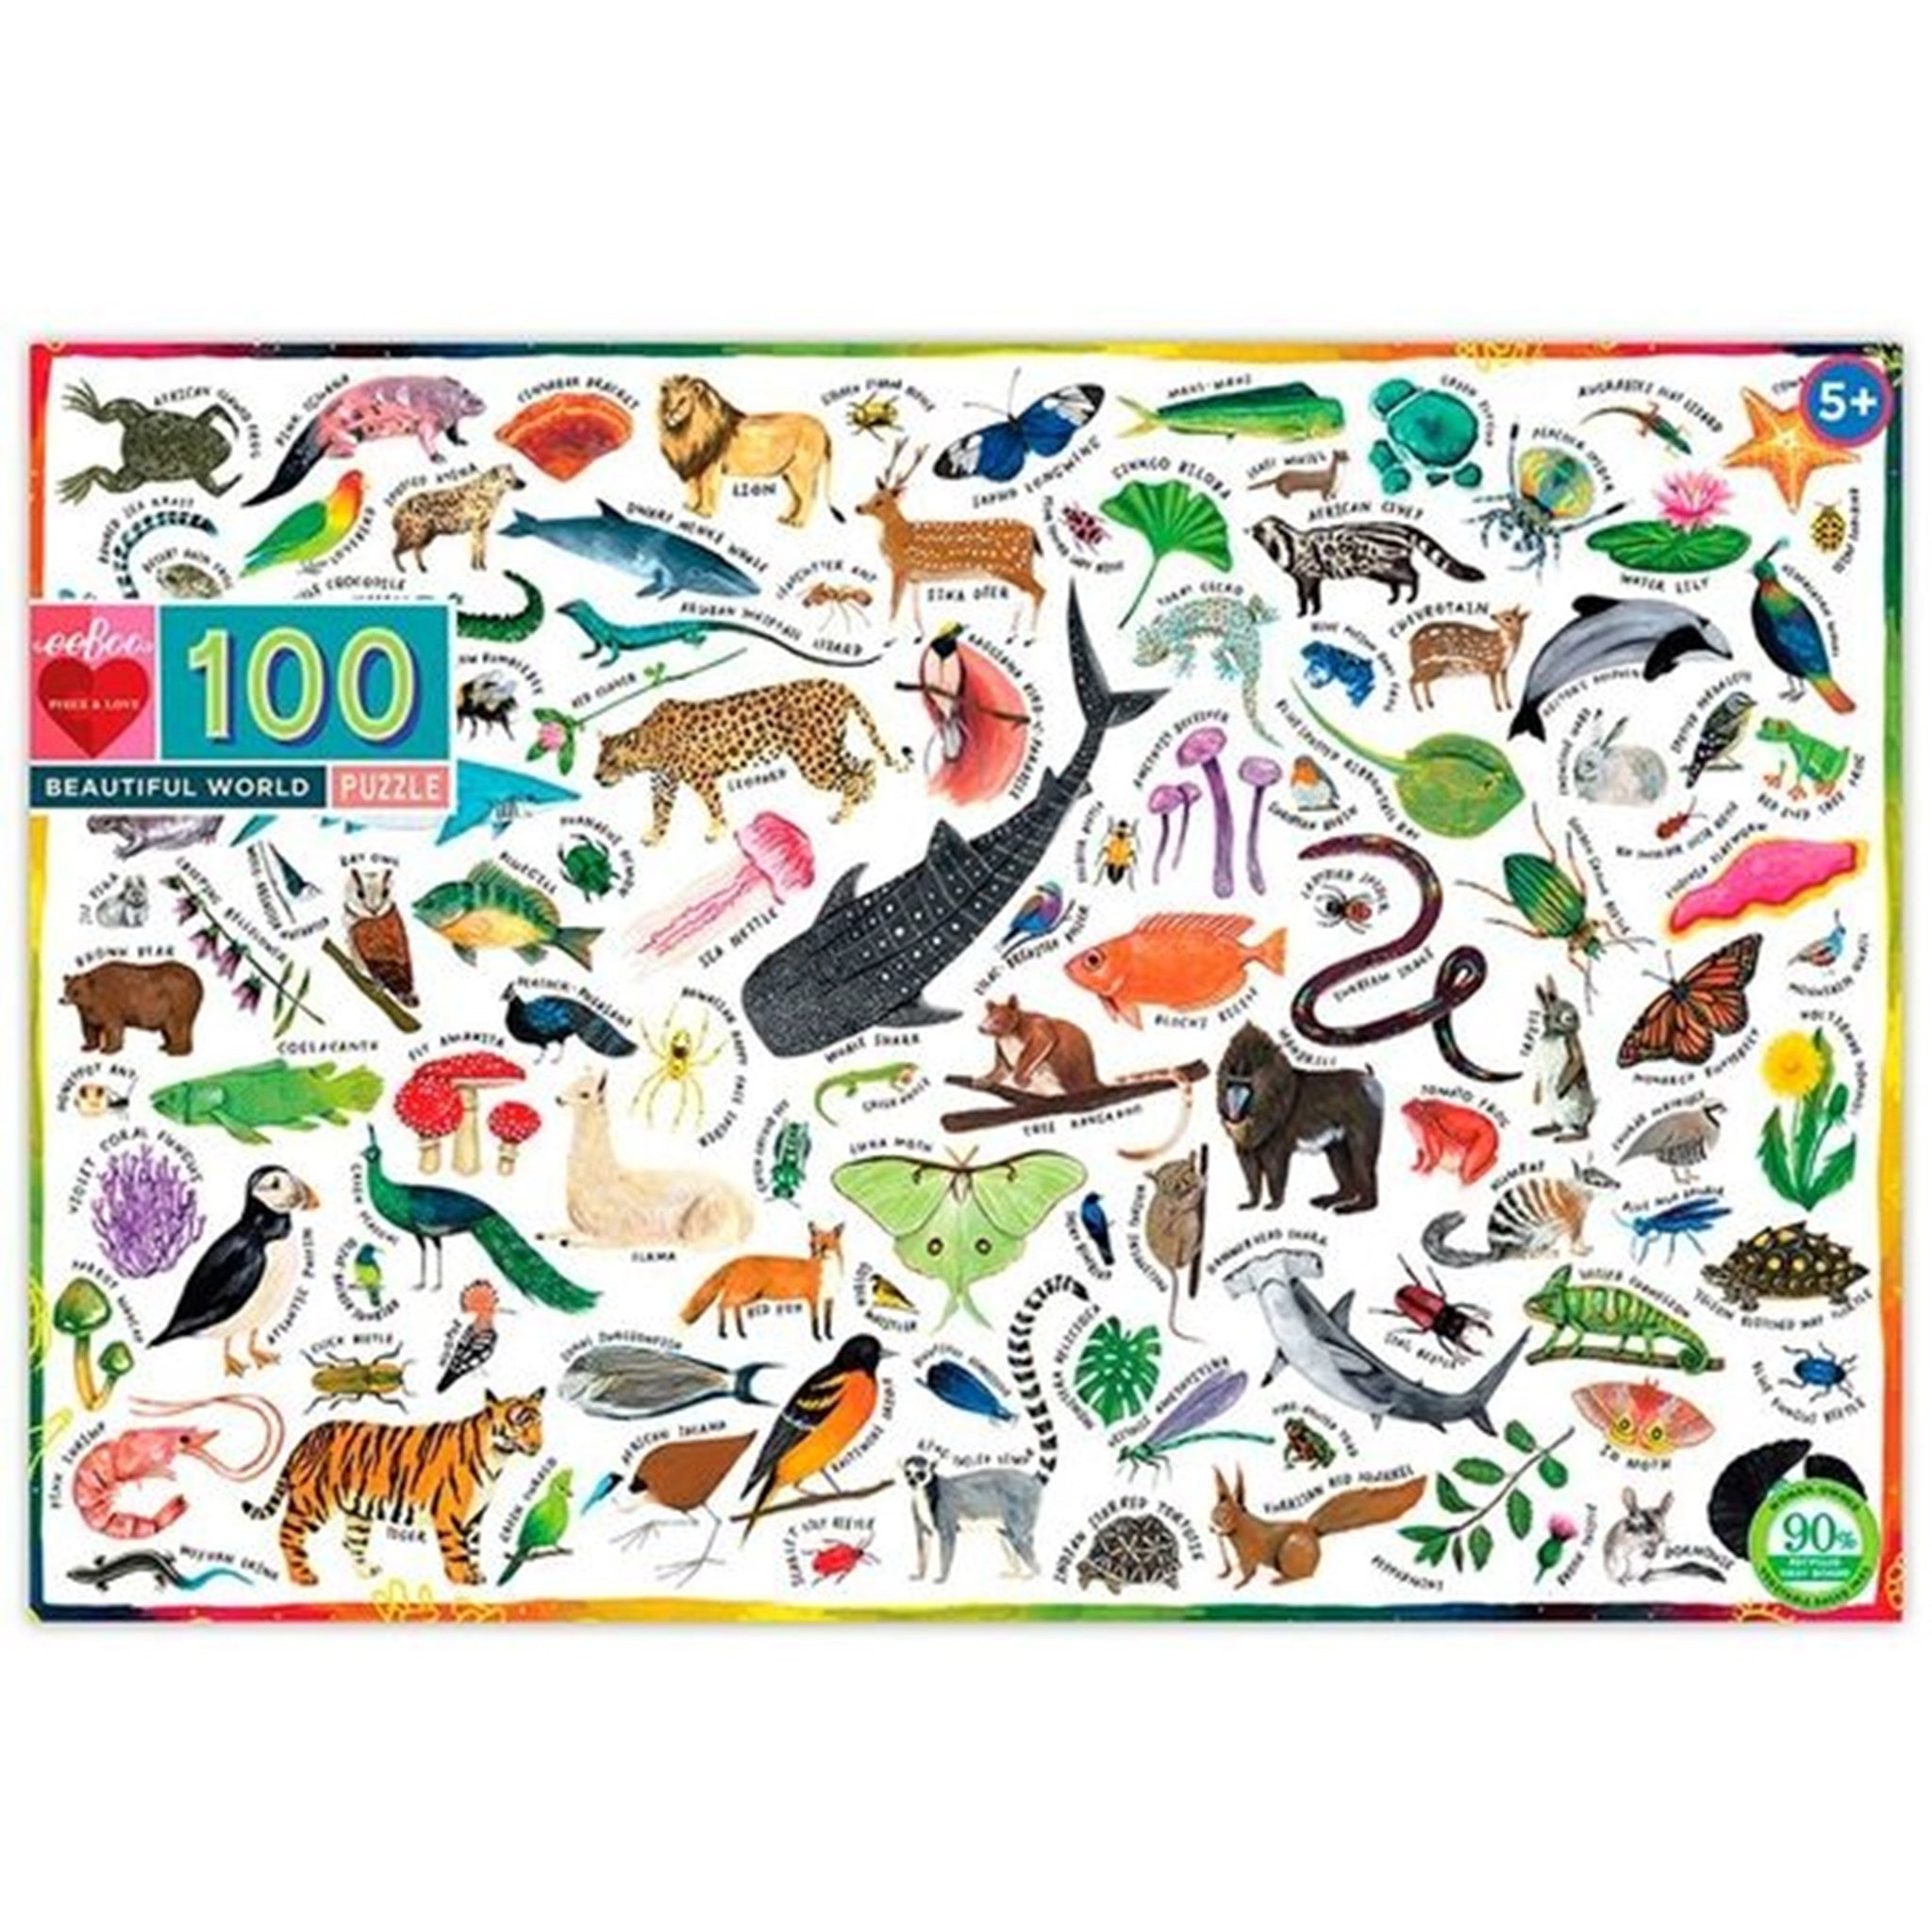 Eeboo Puzzle 100 Pieces - Animals in the World